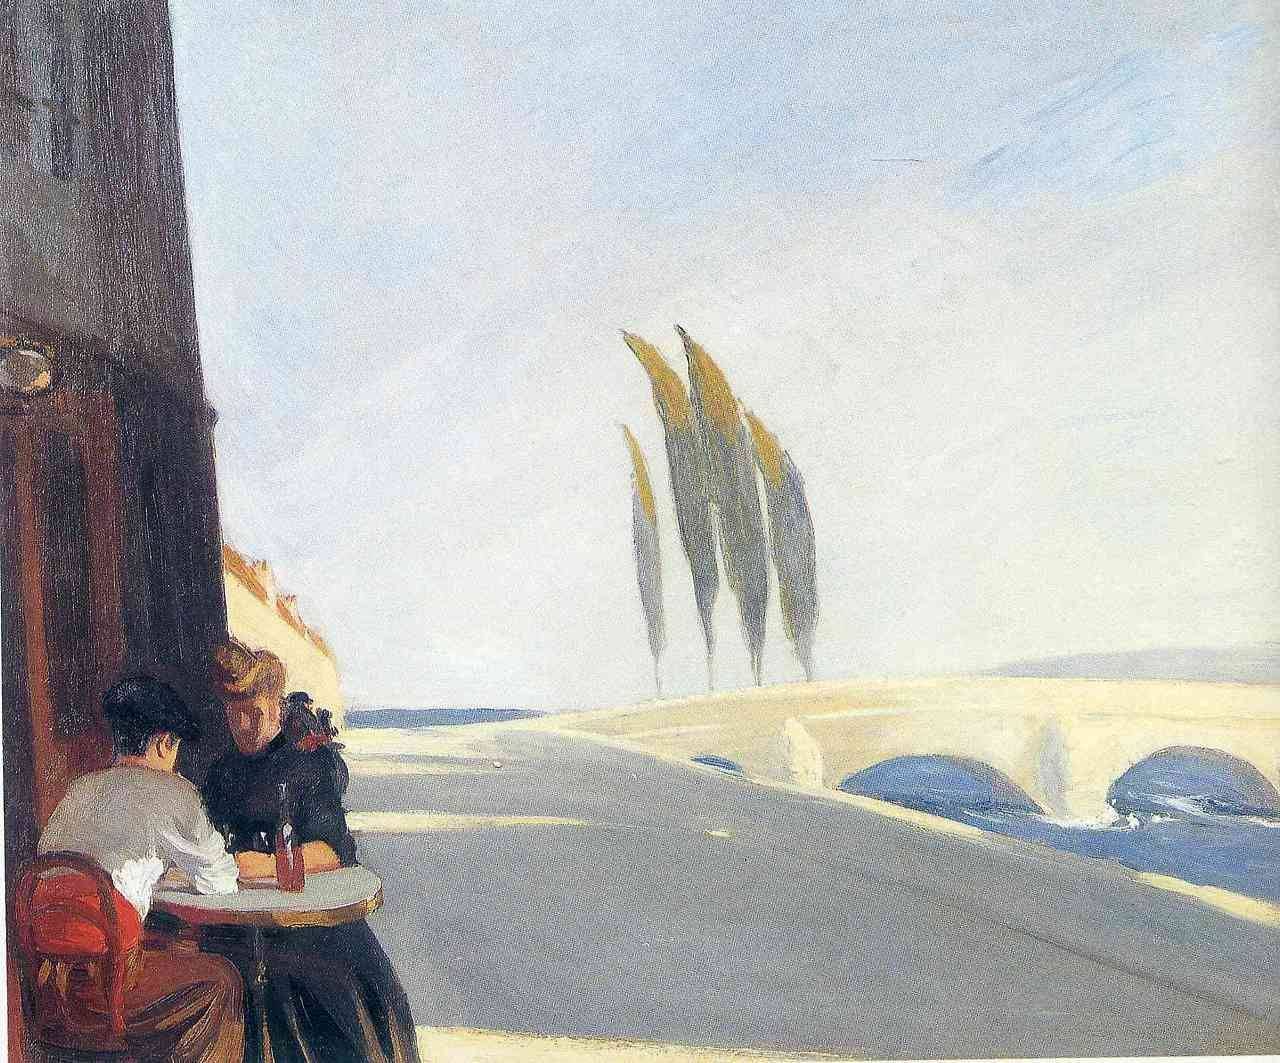 Бистро (Винный Магазин) by Edward Hopper - 1909 